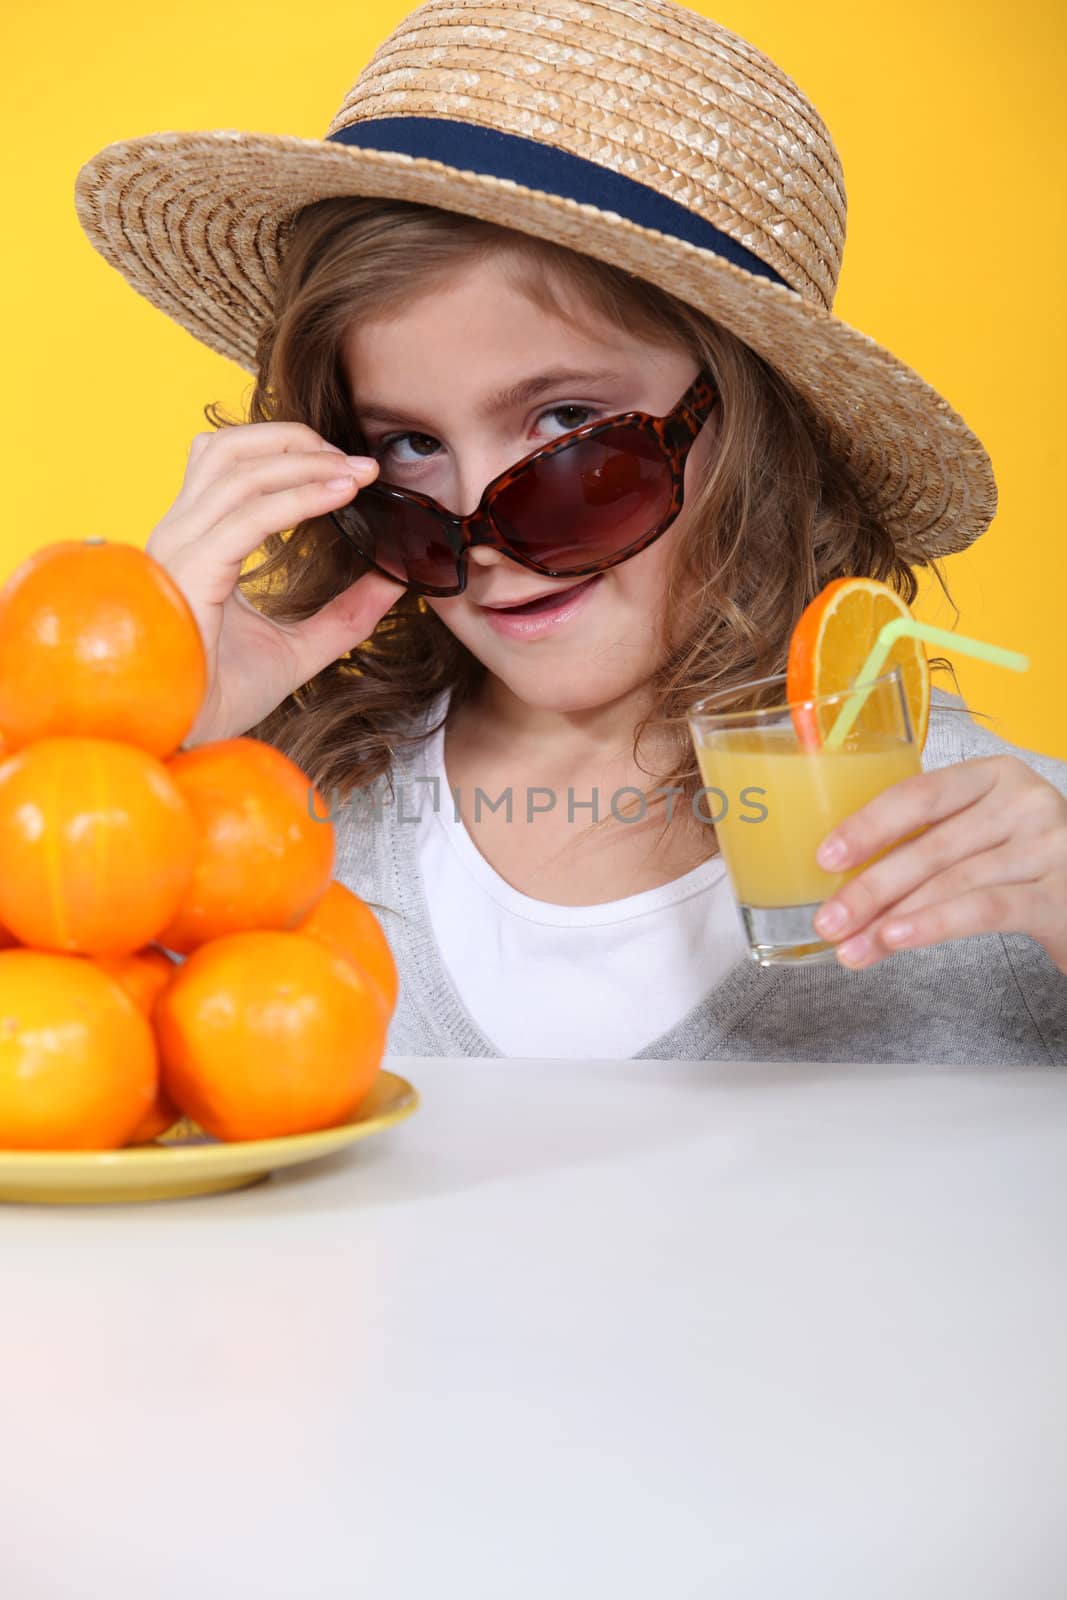 Little girl with freshly squeezed orange juice